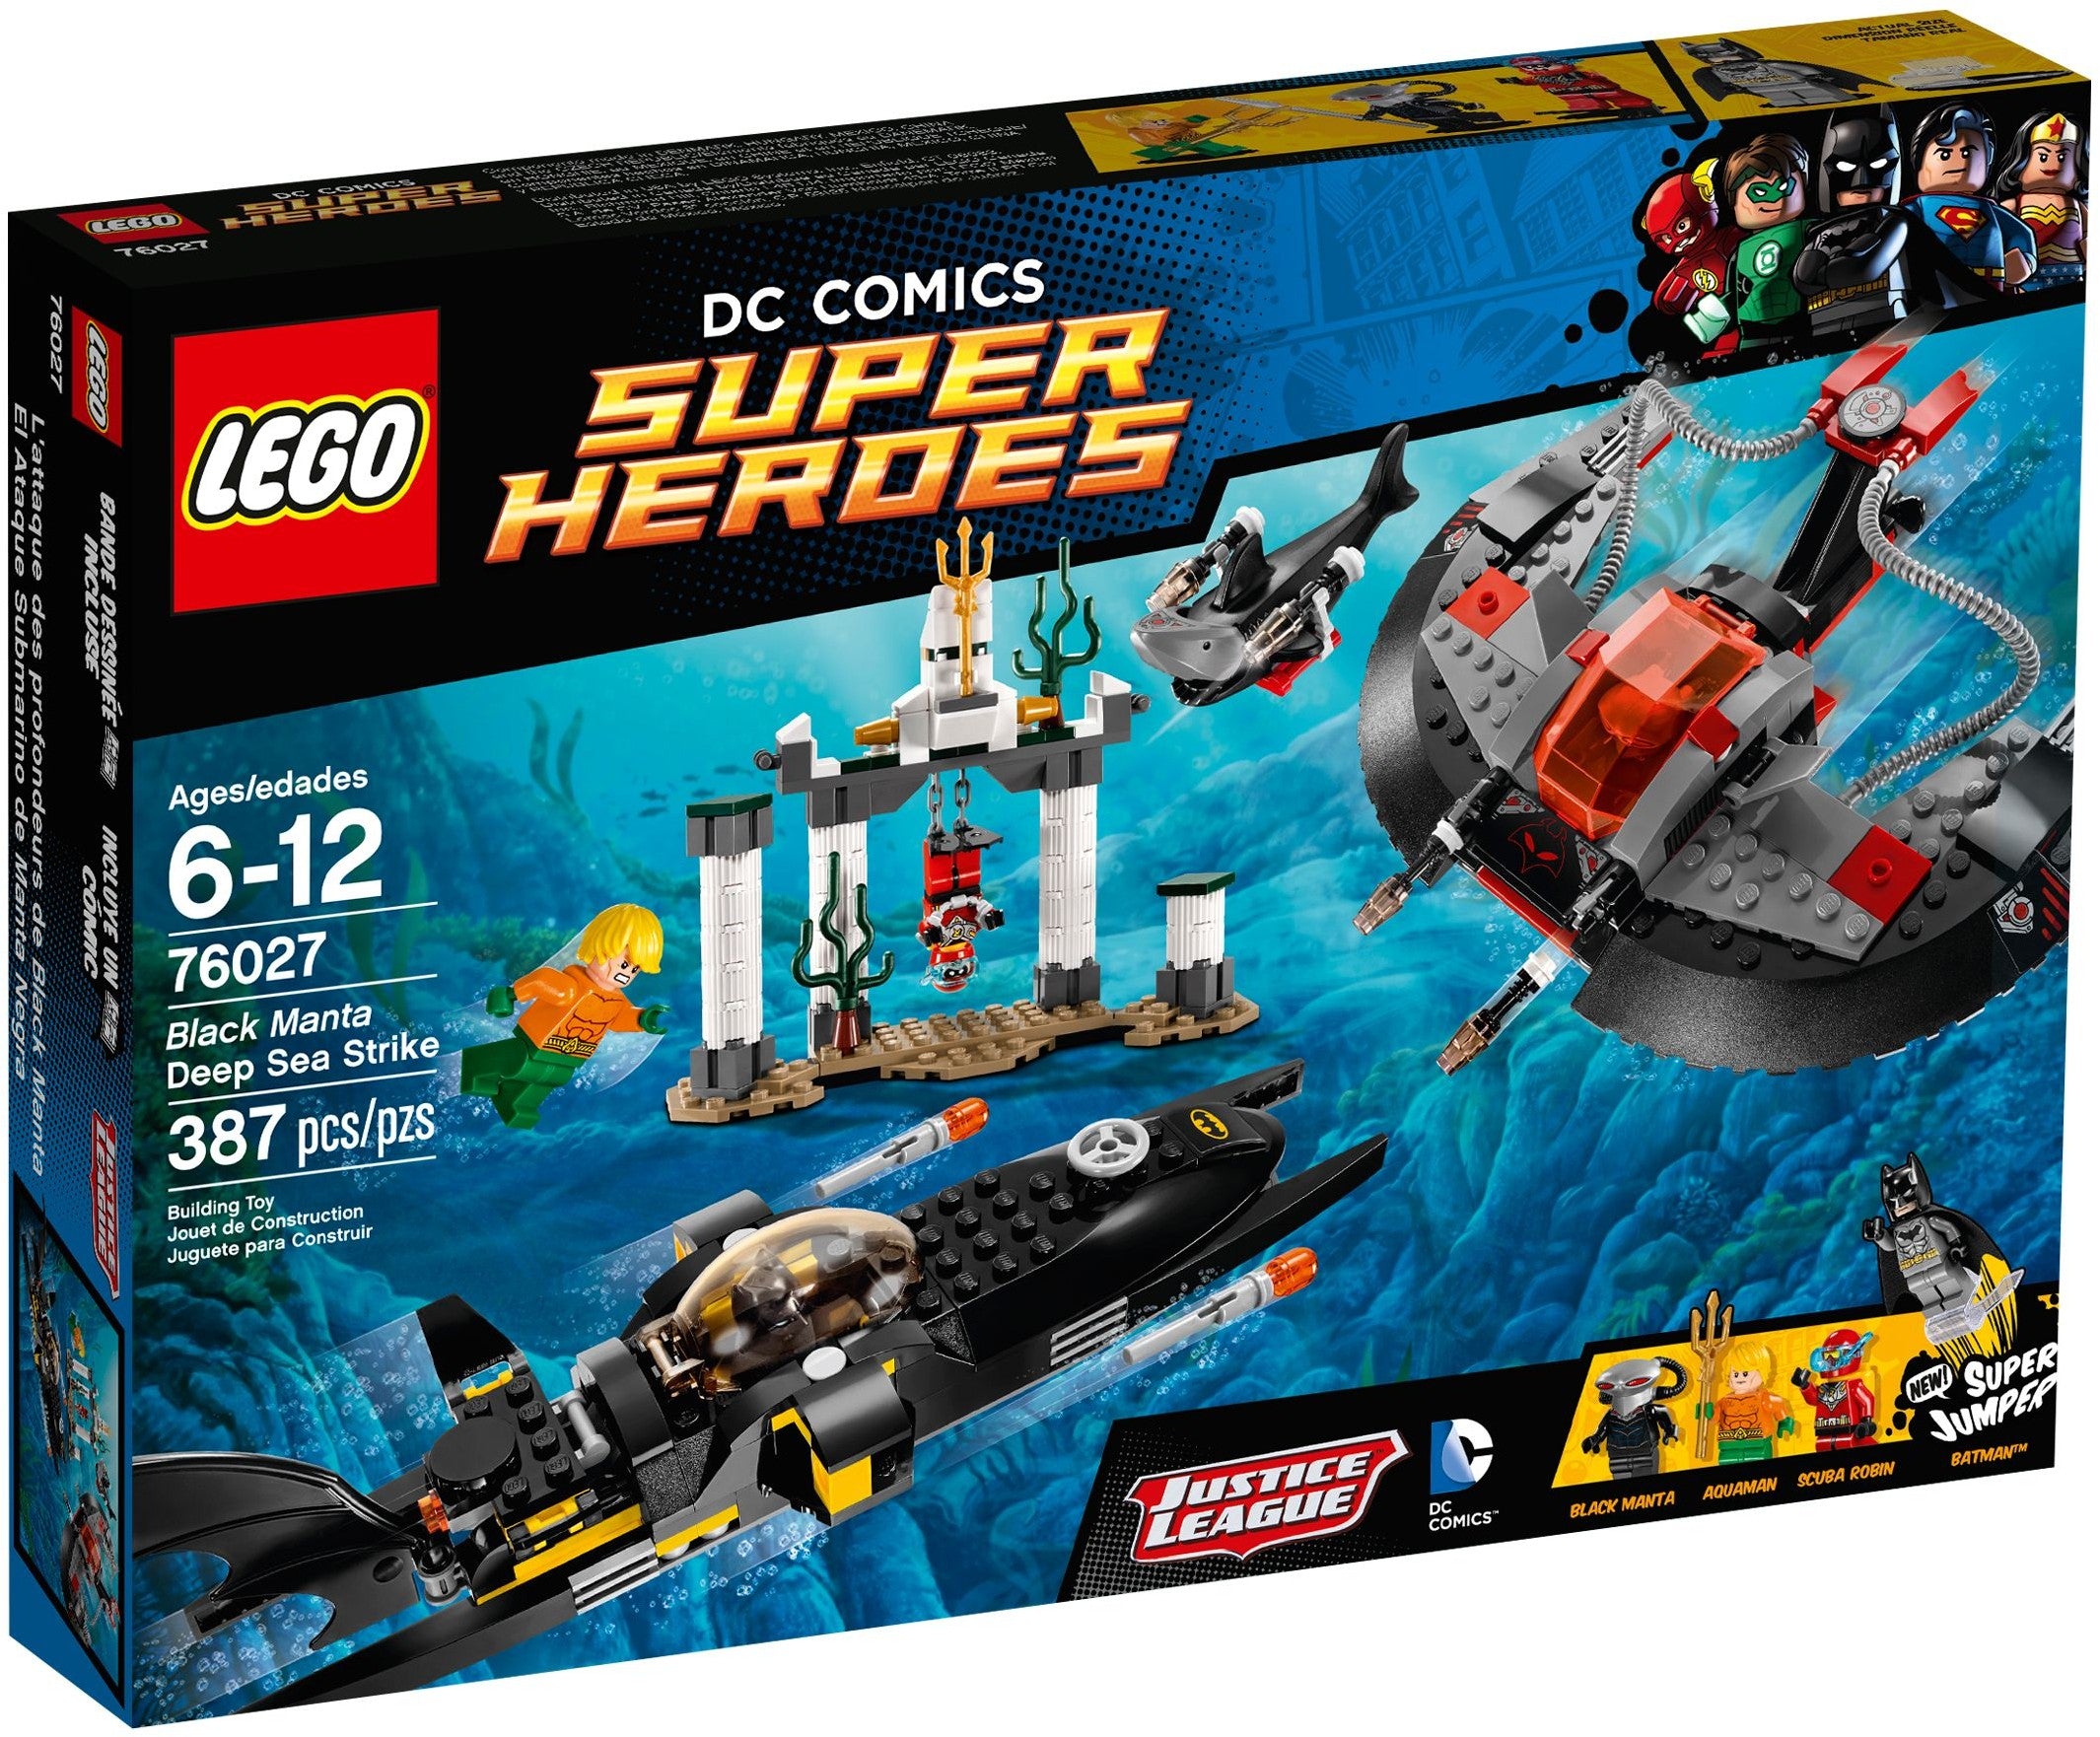 Lego Super Heroes 76027 - Black Manta Deep Sea Strike